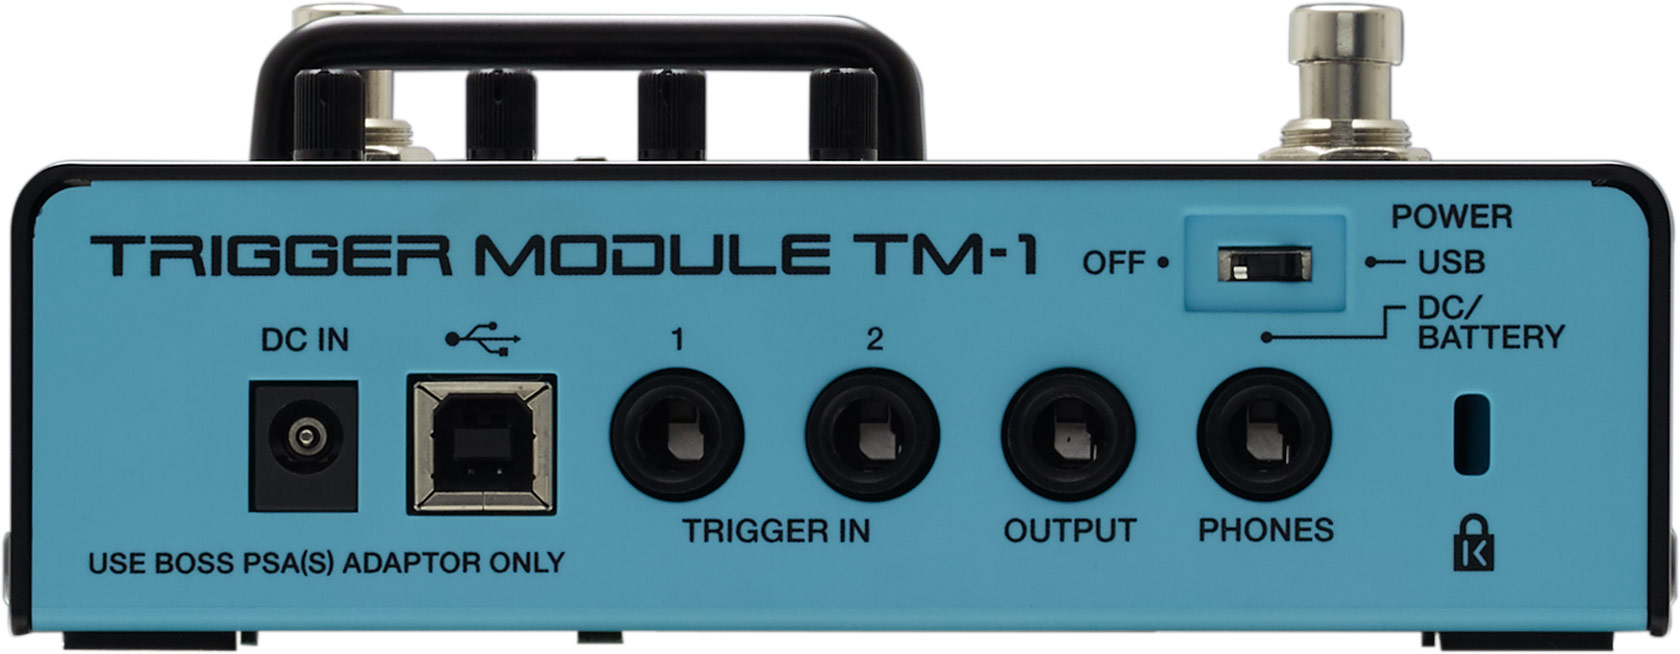 Roland Tm-1 Trigger Module - Elektronisch drumstel trigger - Variation 2